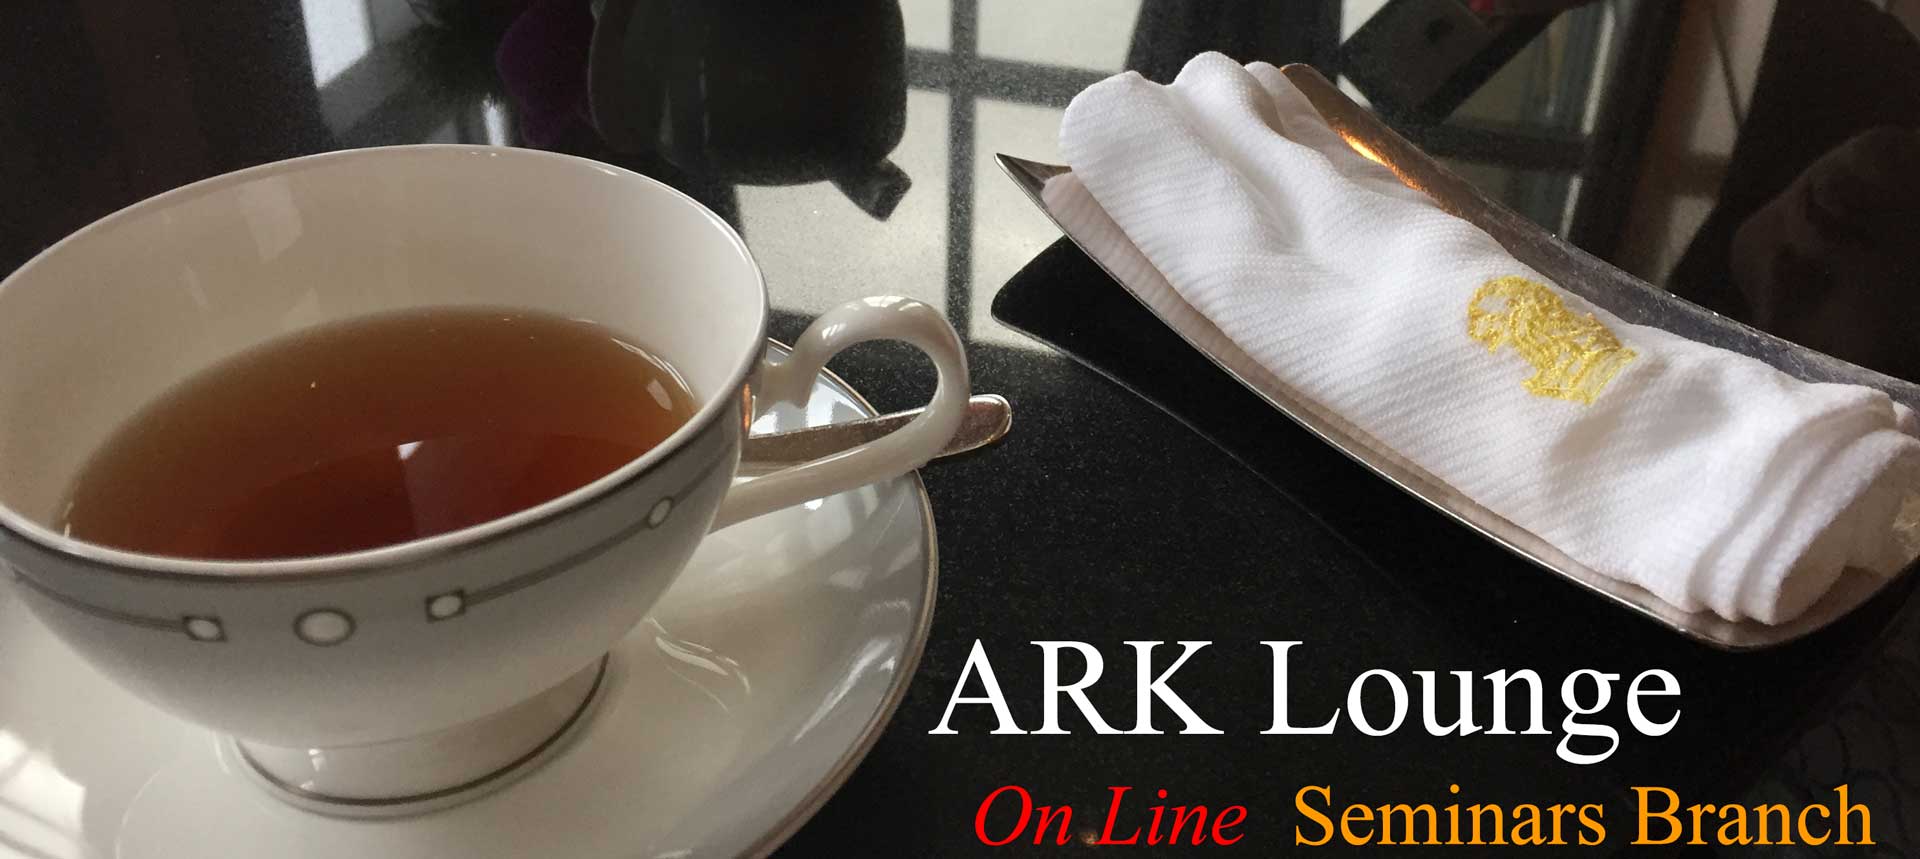 ARK Lounge on line Seminars Branch